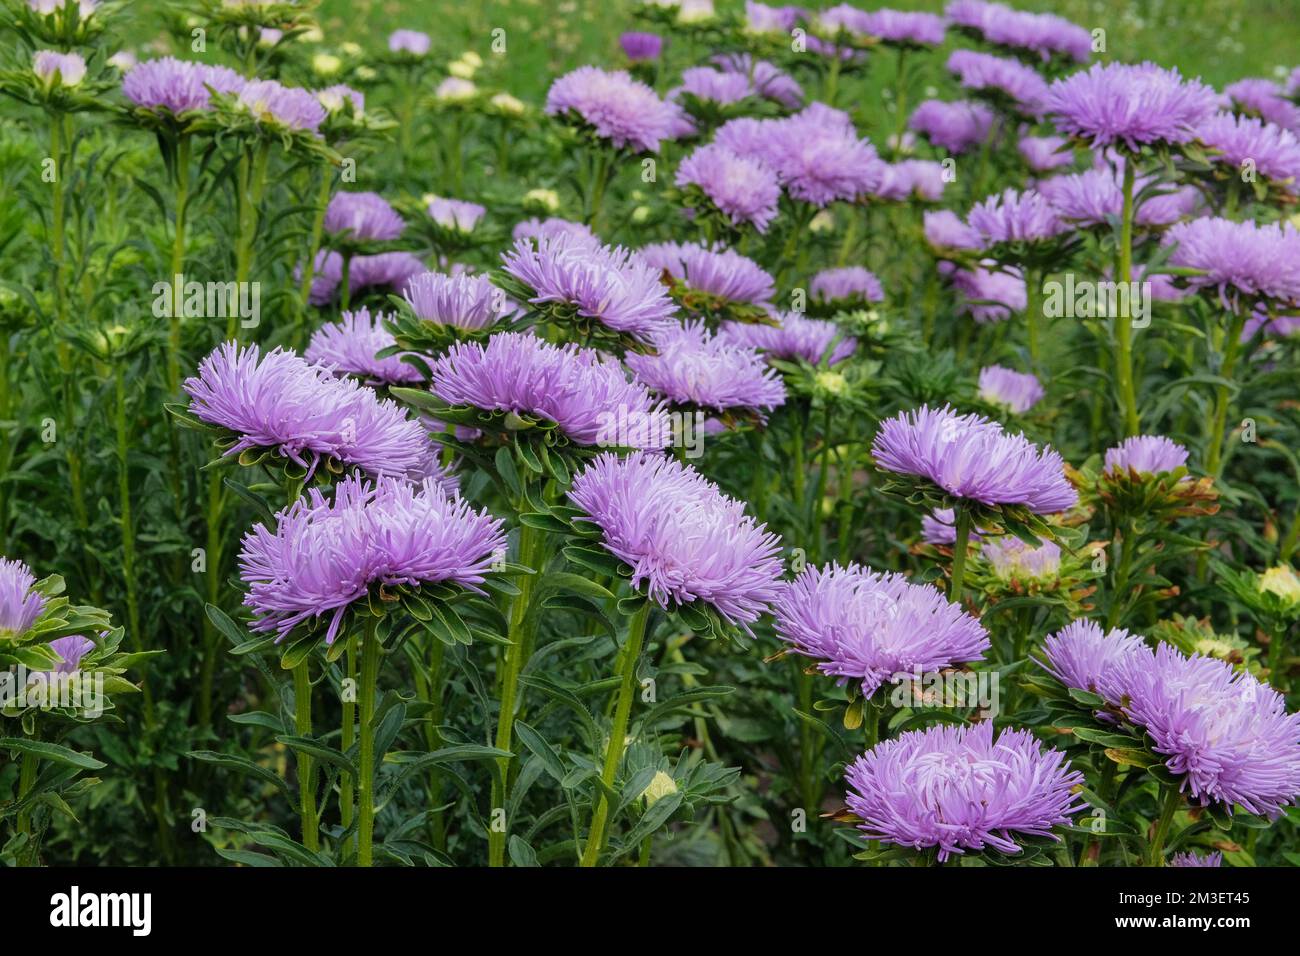 Asters in gardening garden. Violet blooming flowers in garden. Natural blooming background. Stock Photo